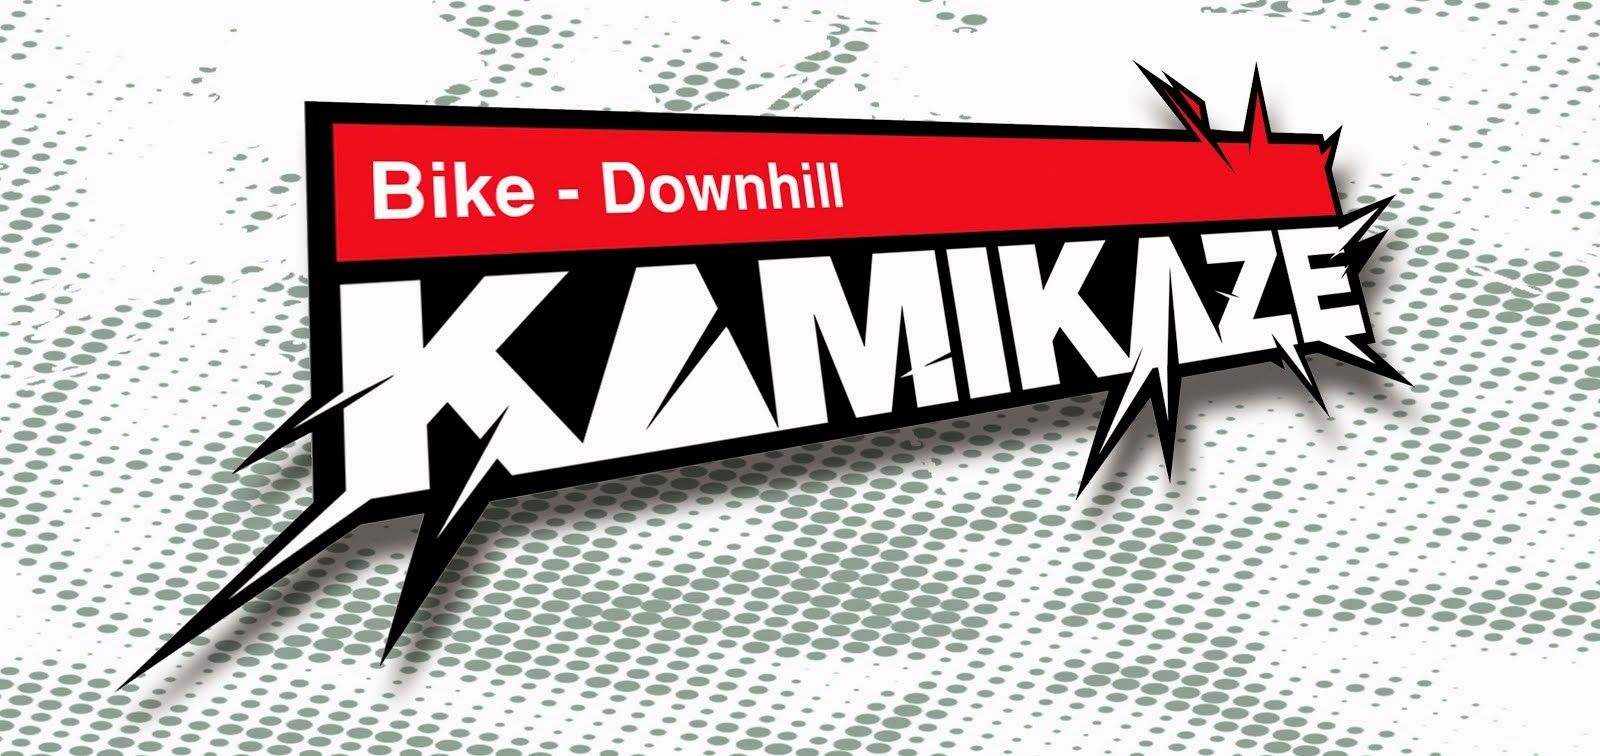 Kamikaze - bike downhill